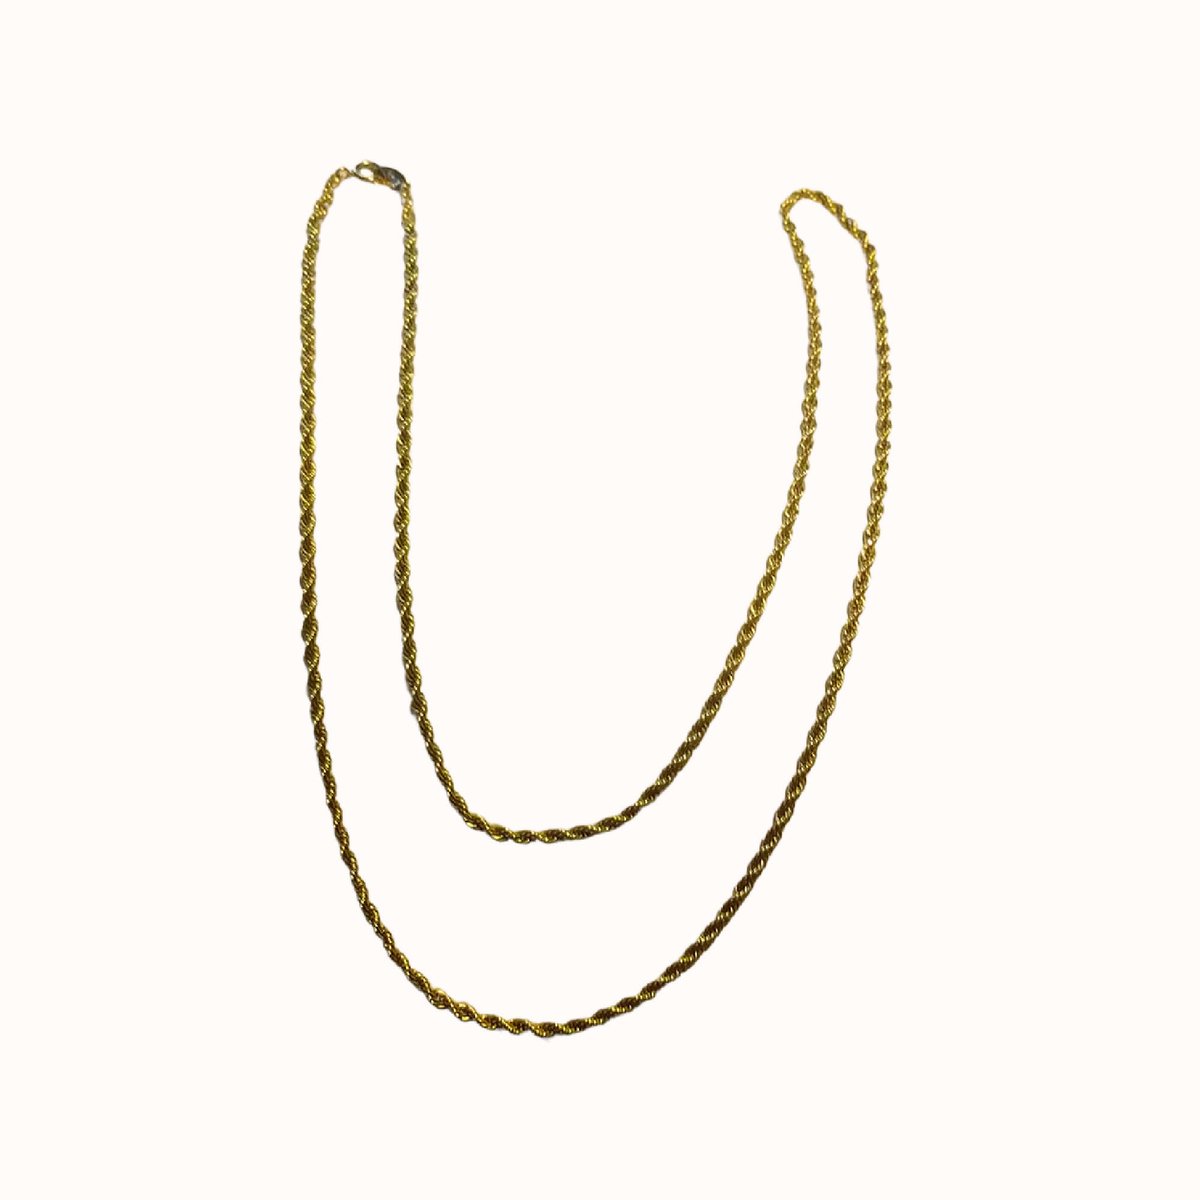 Trifari Gold Tone Rope Chain Necklace' Long, Free Shipping tuppu.net/3d7c3603 #JunkYardBlonde #Etsy #Etsysellsvintage